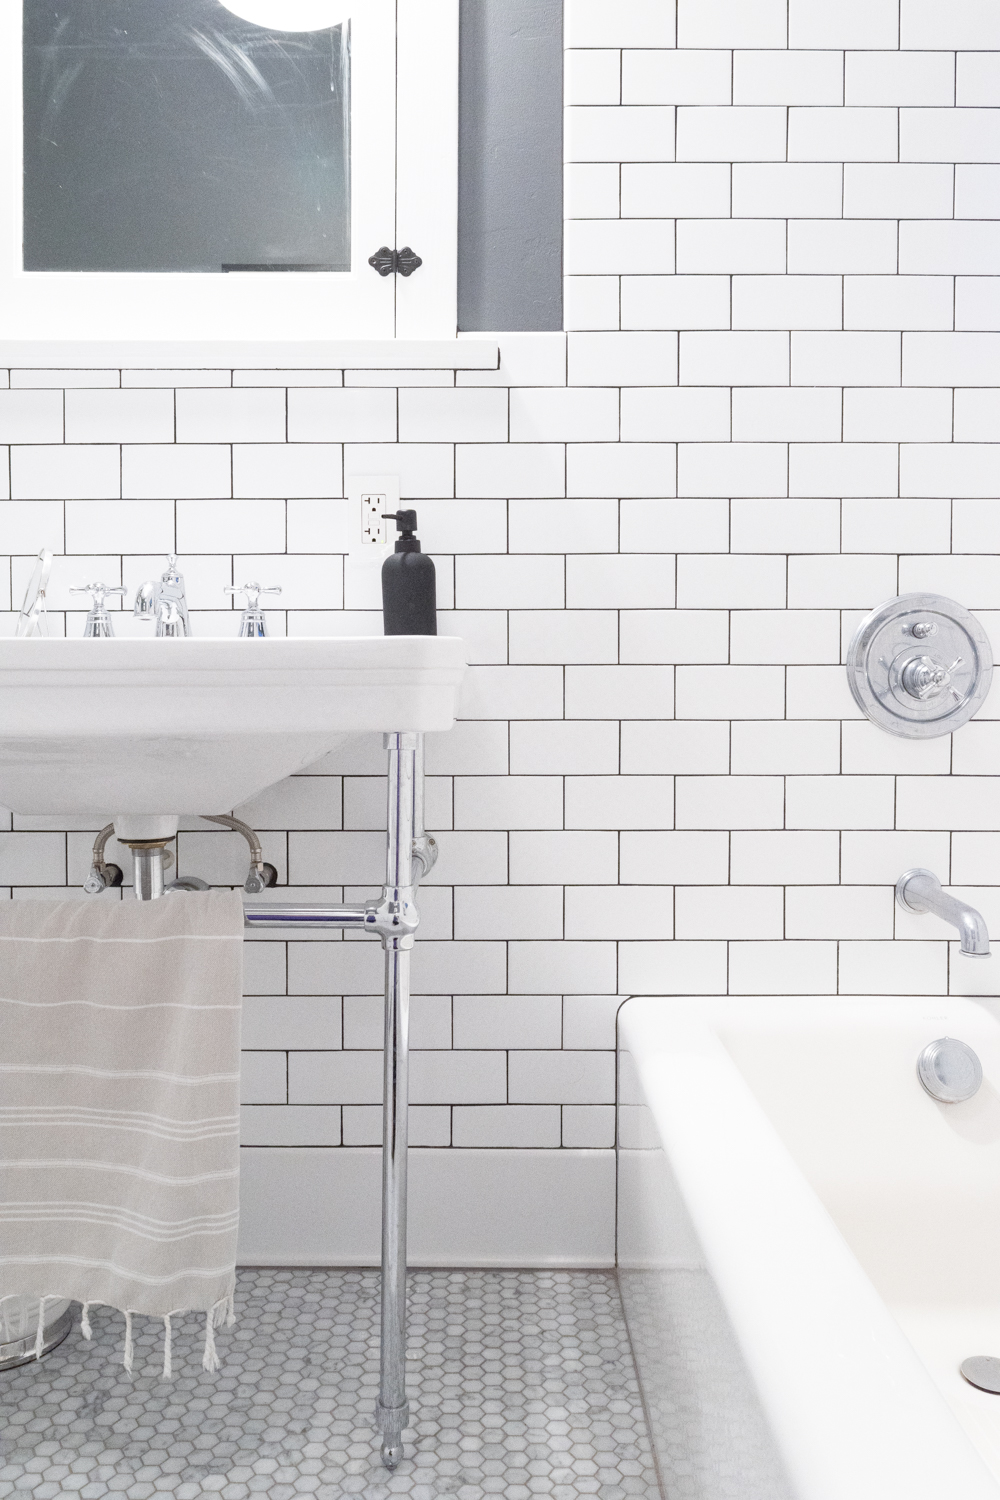 Classic Tile In The Bathroom, Classic Bathroom Floor Tile Patterns